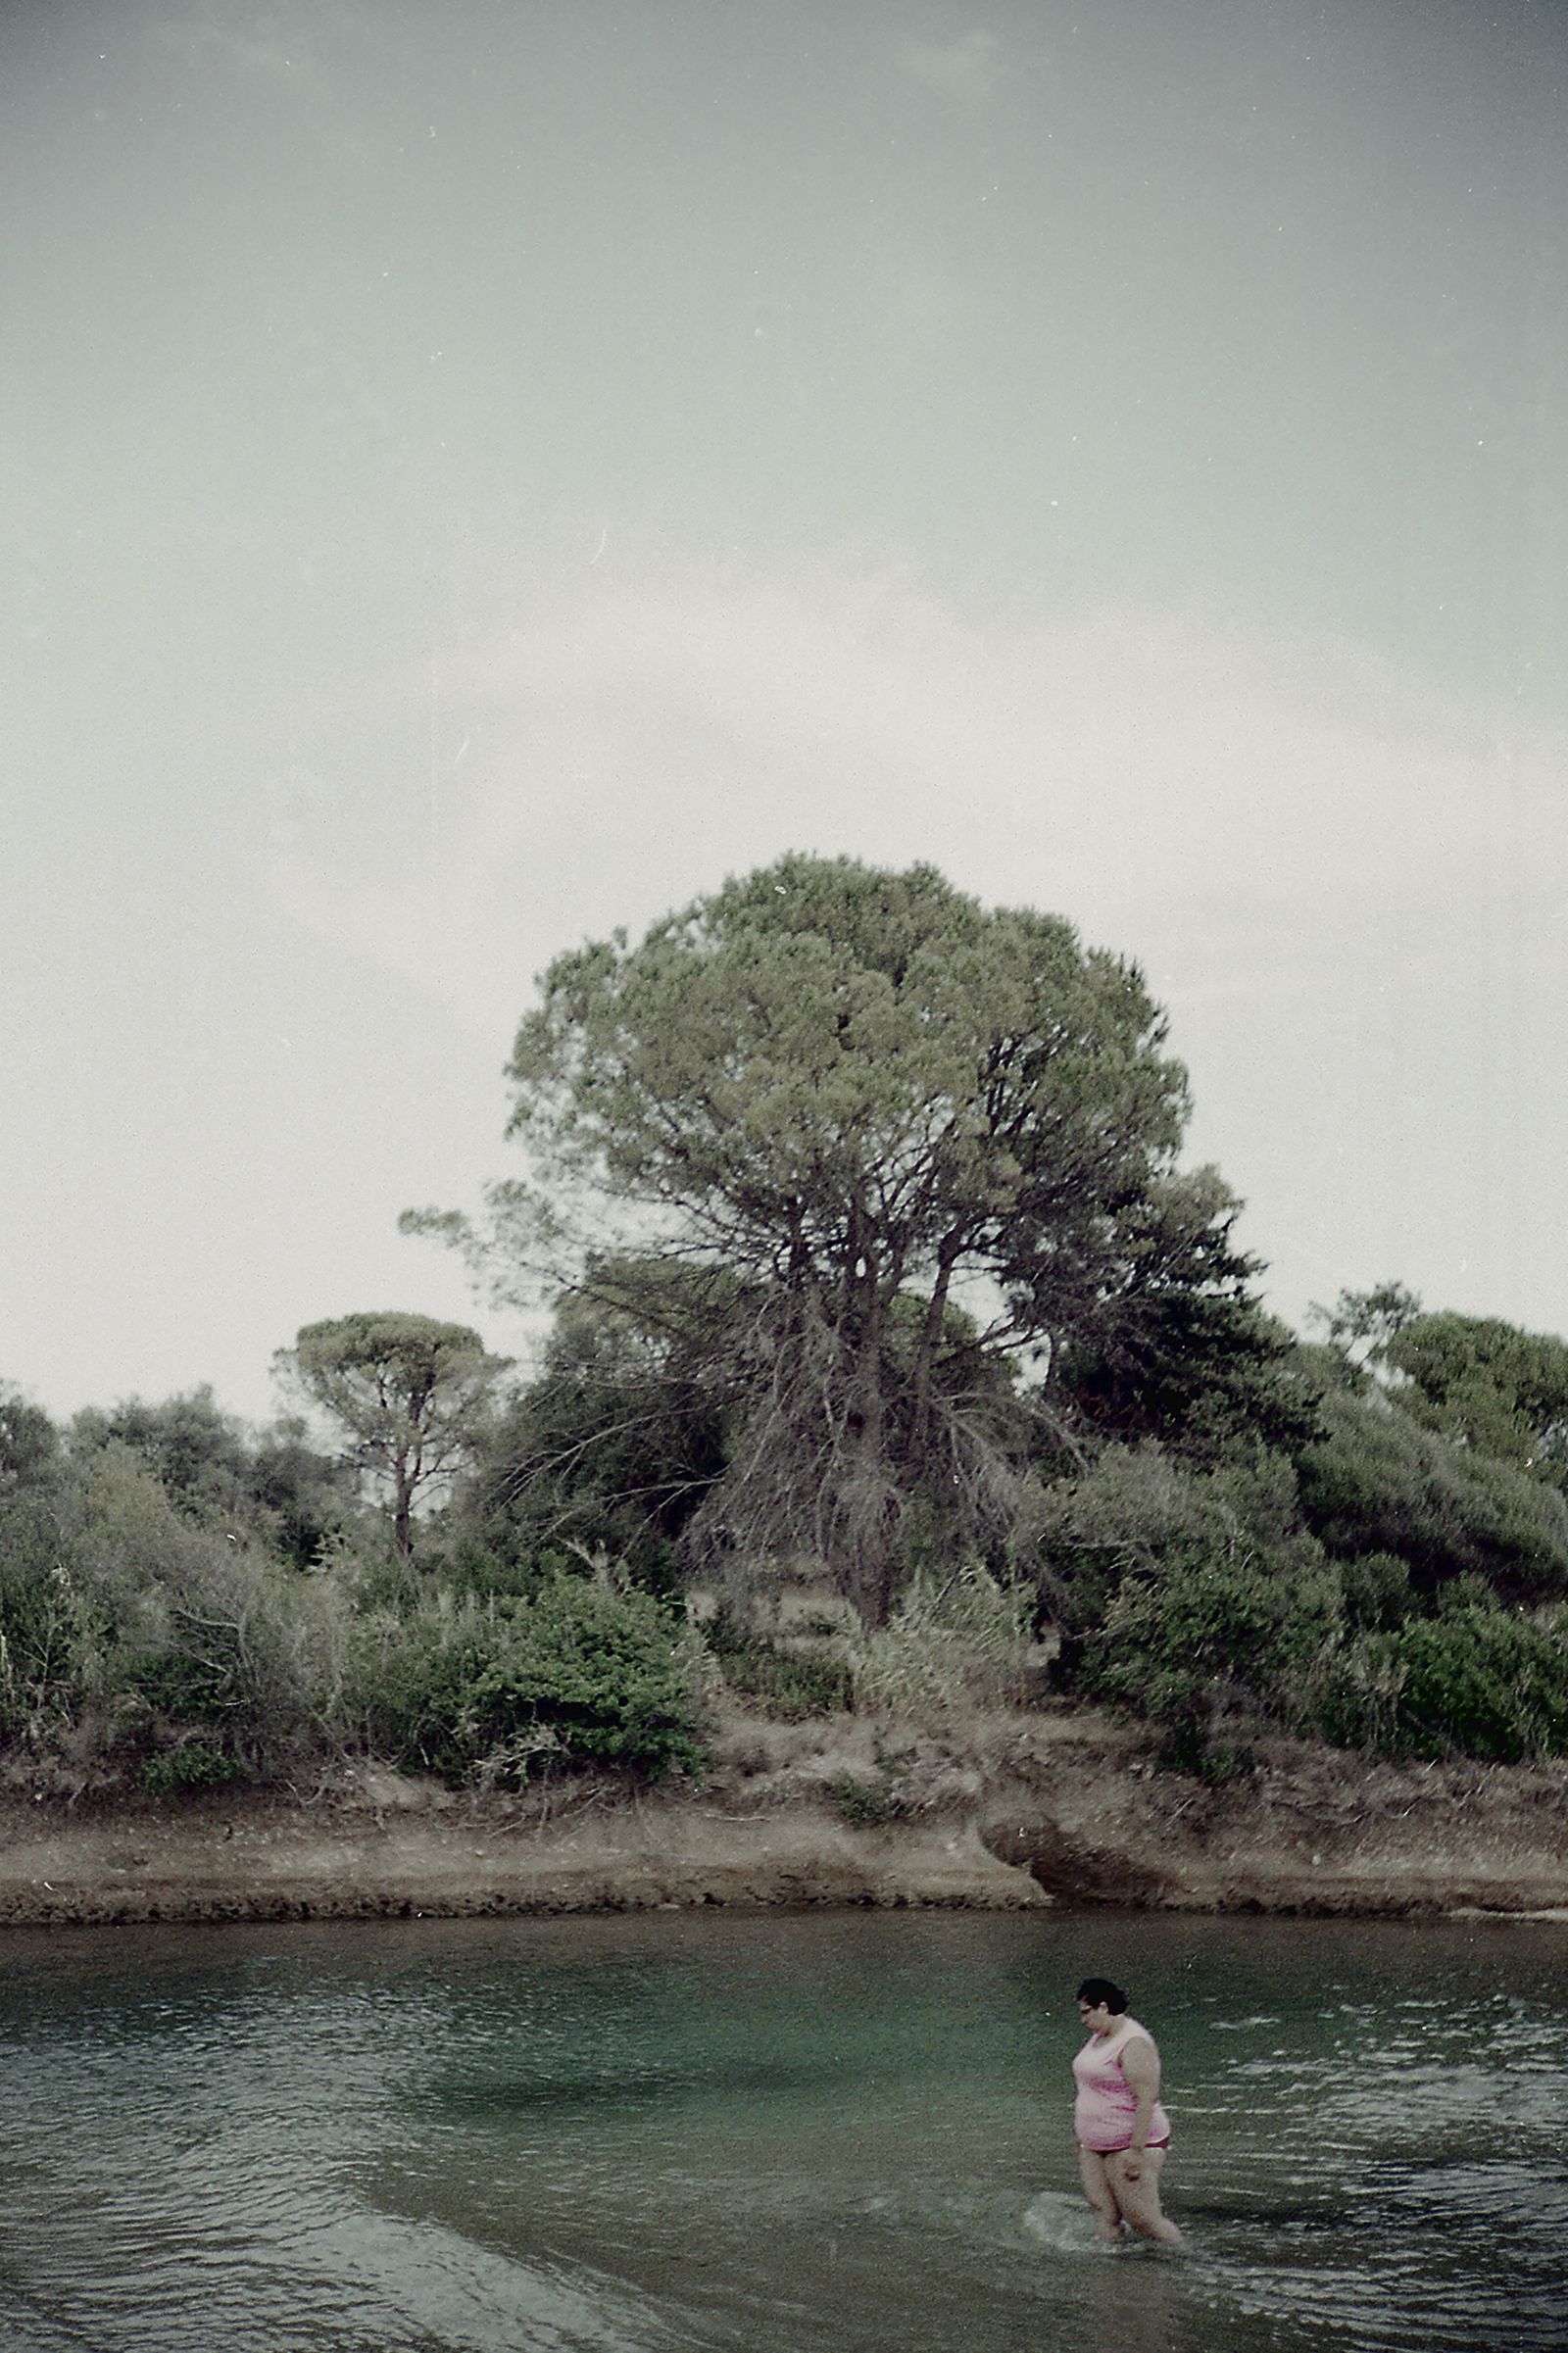 © Enrico Doria - Image from the Aria Siciliana photography project